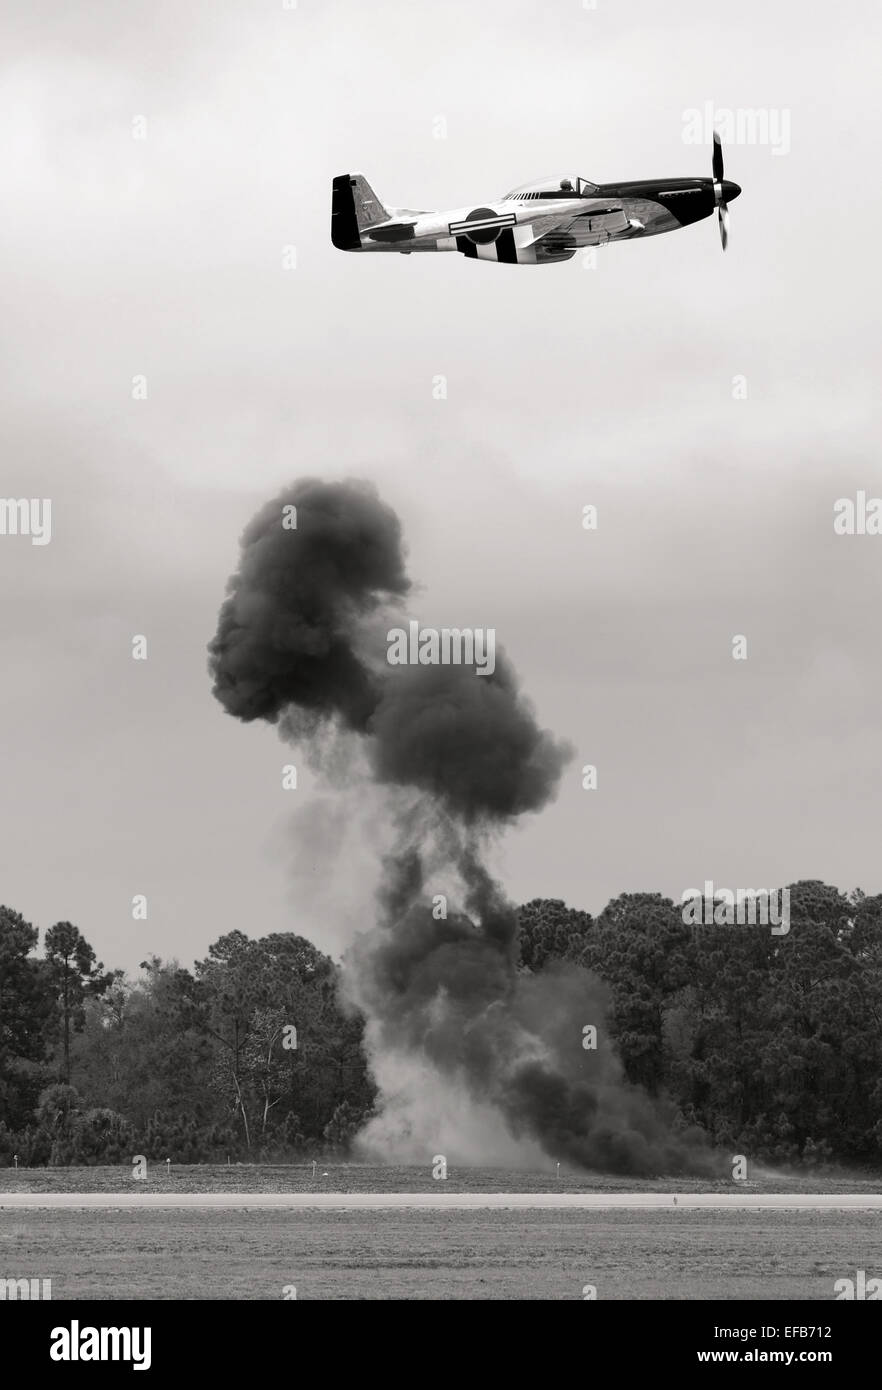 Wolrd War II era airplane dropping bombs Stock Photo